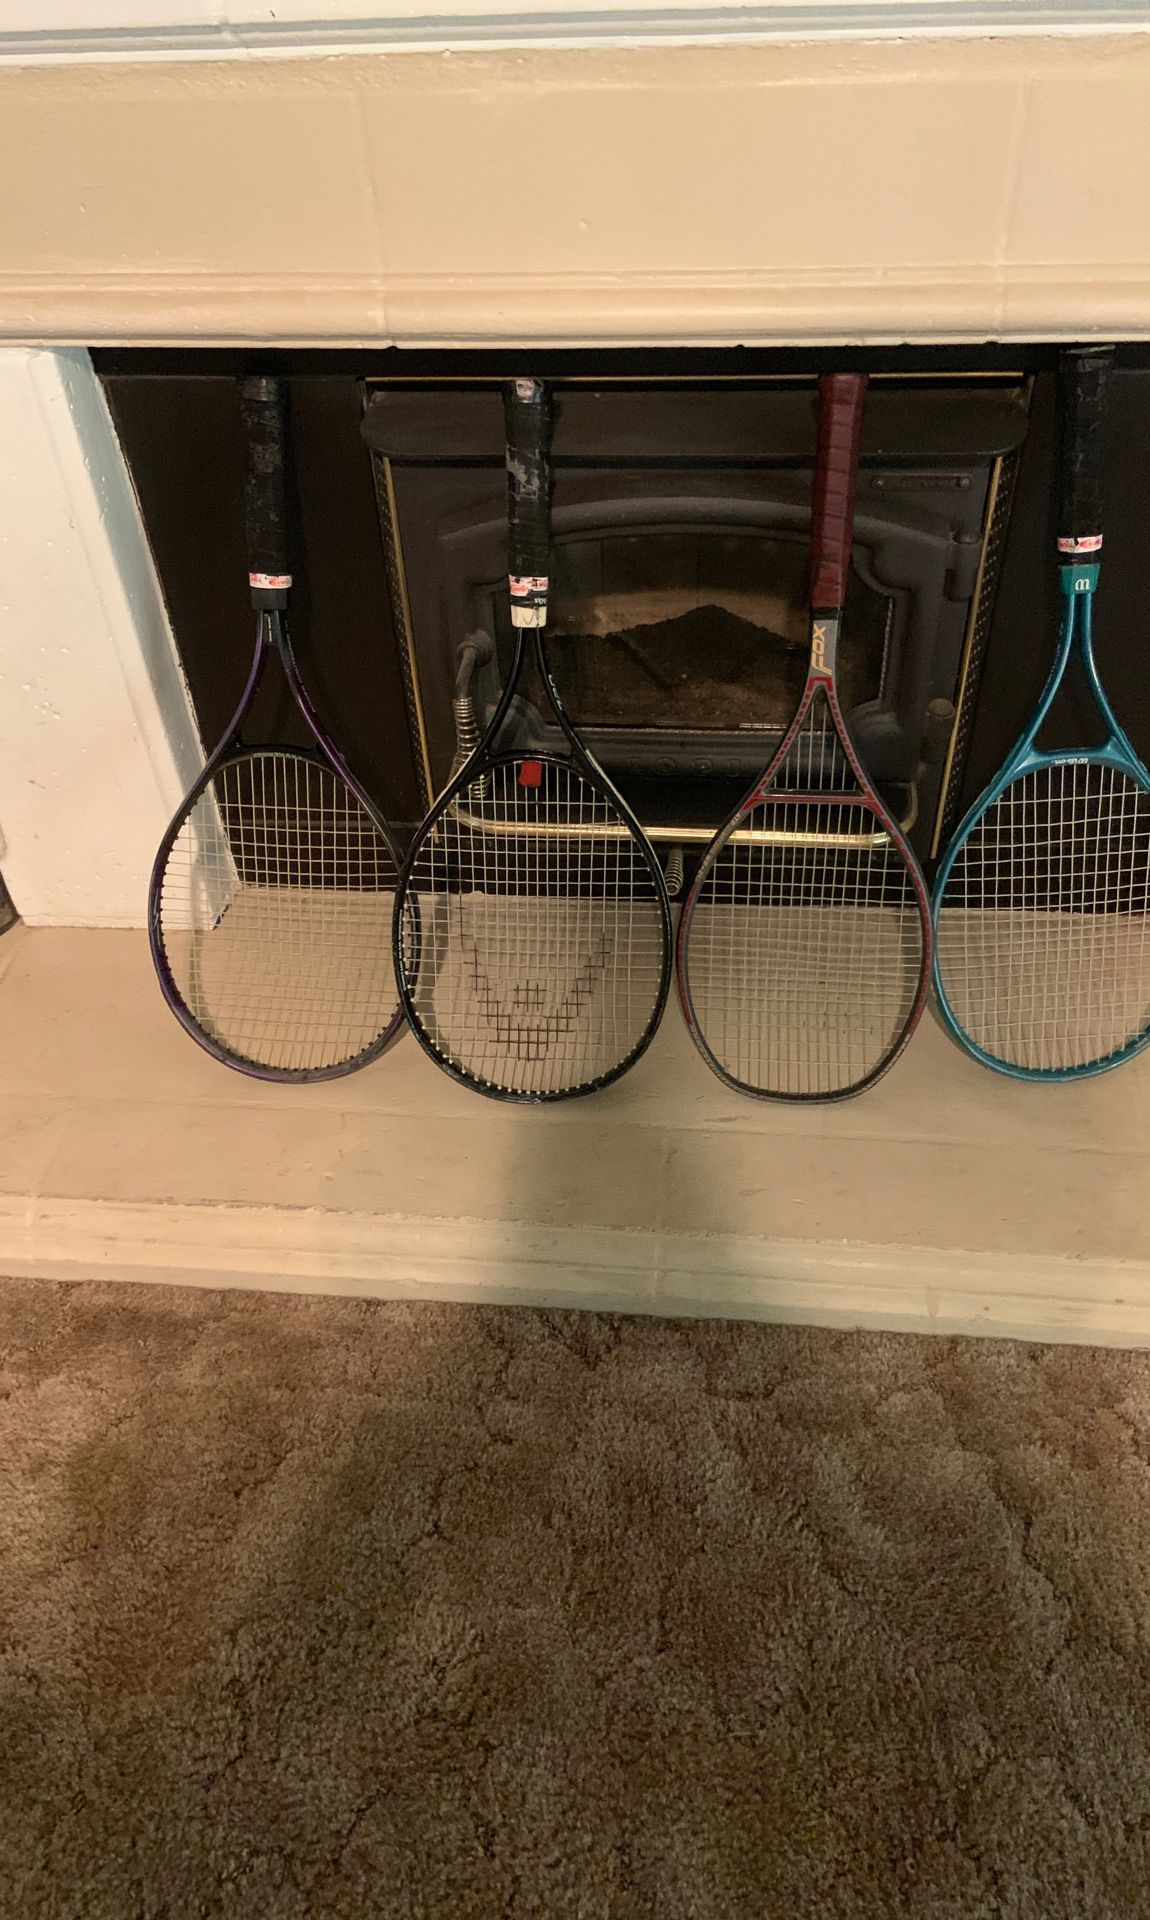 4 Nice Tennis Rackets With Bag